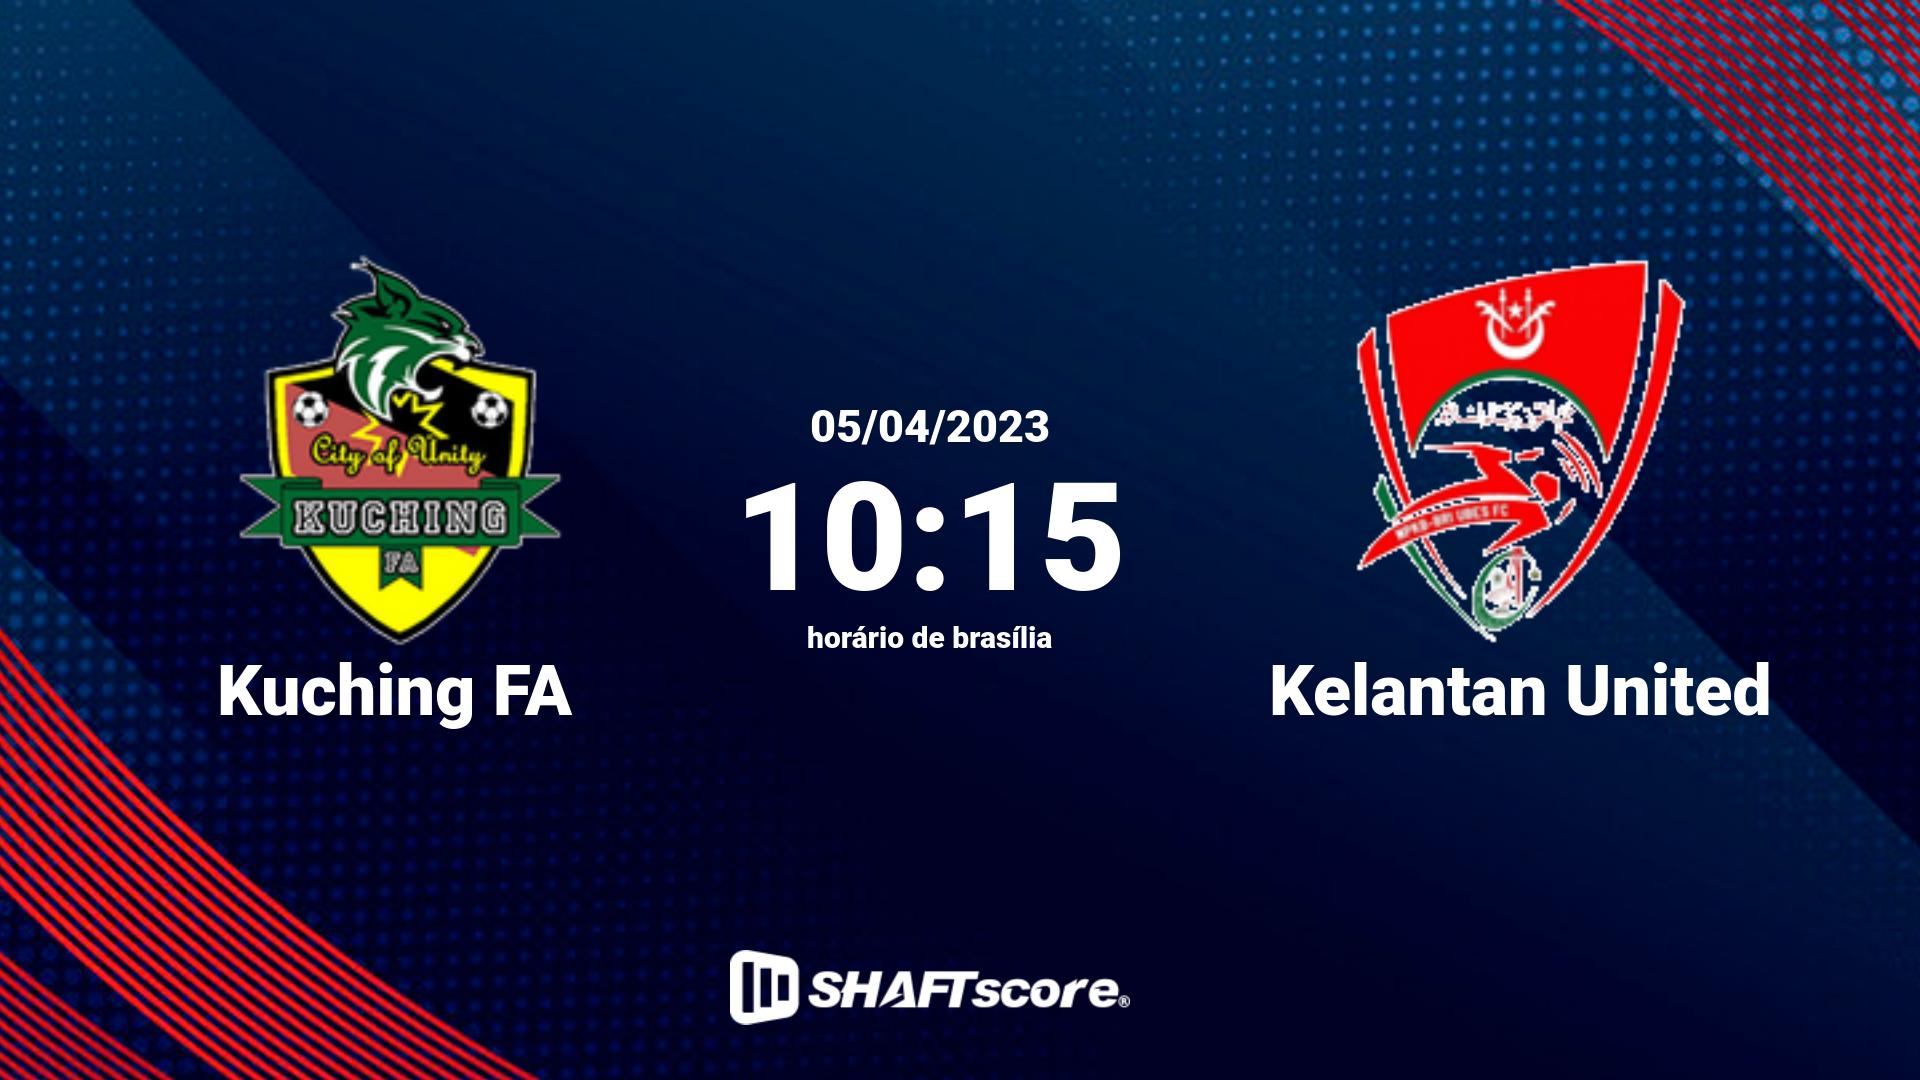 Estatísticas do jogo Kuching FA vs Kelantan United 05.04 10:15